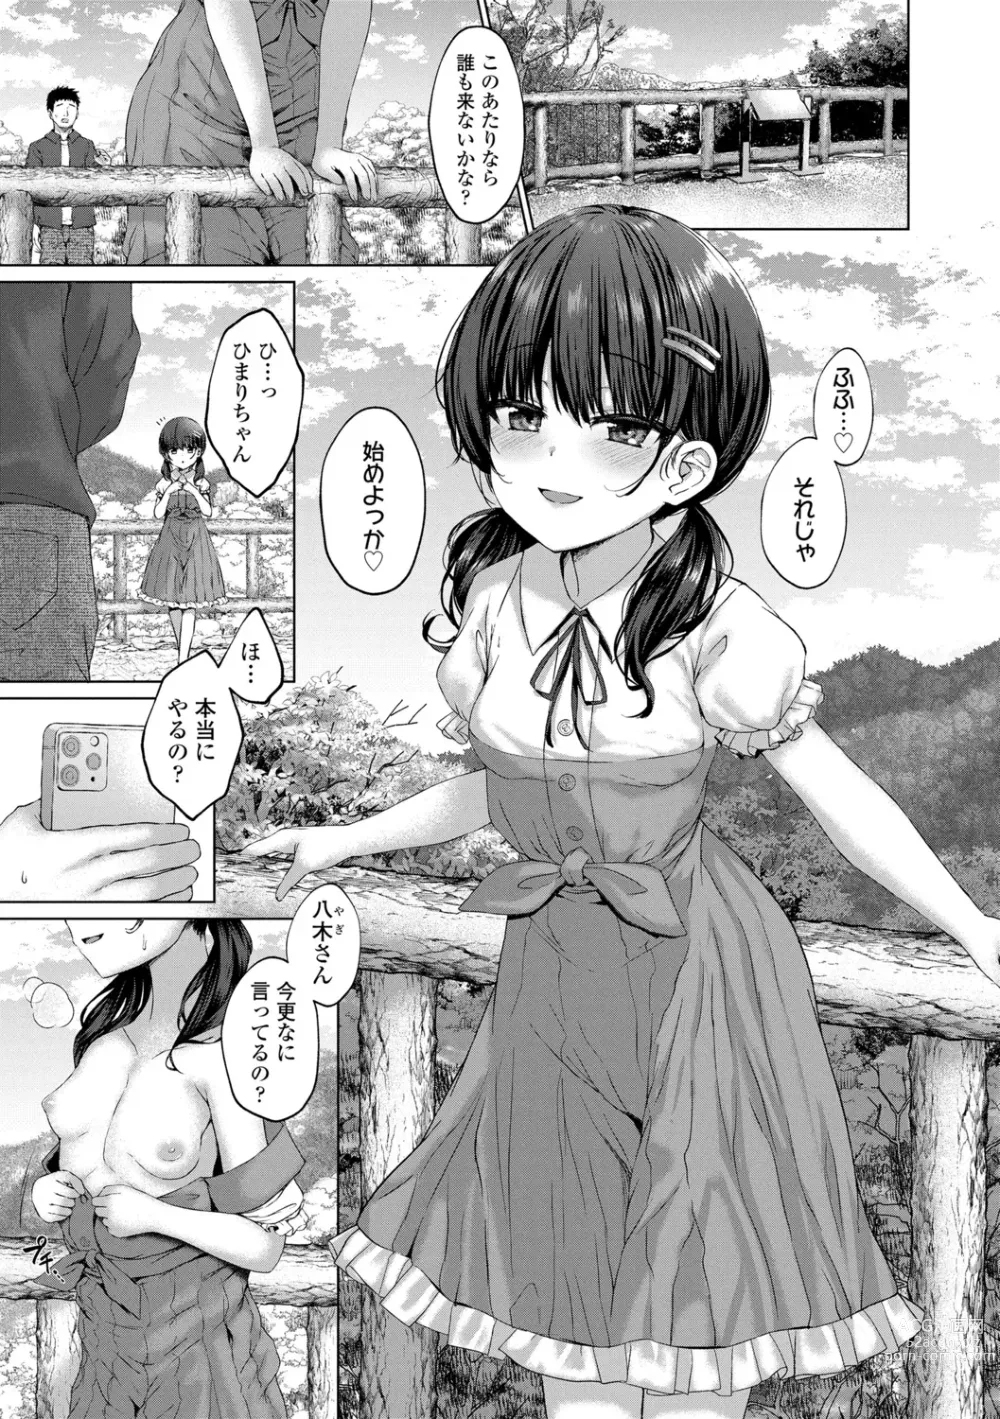 Page 3 of manga Akuma mitai ni kimi wa tatteta